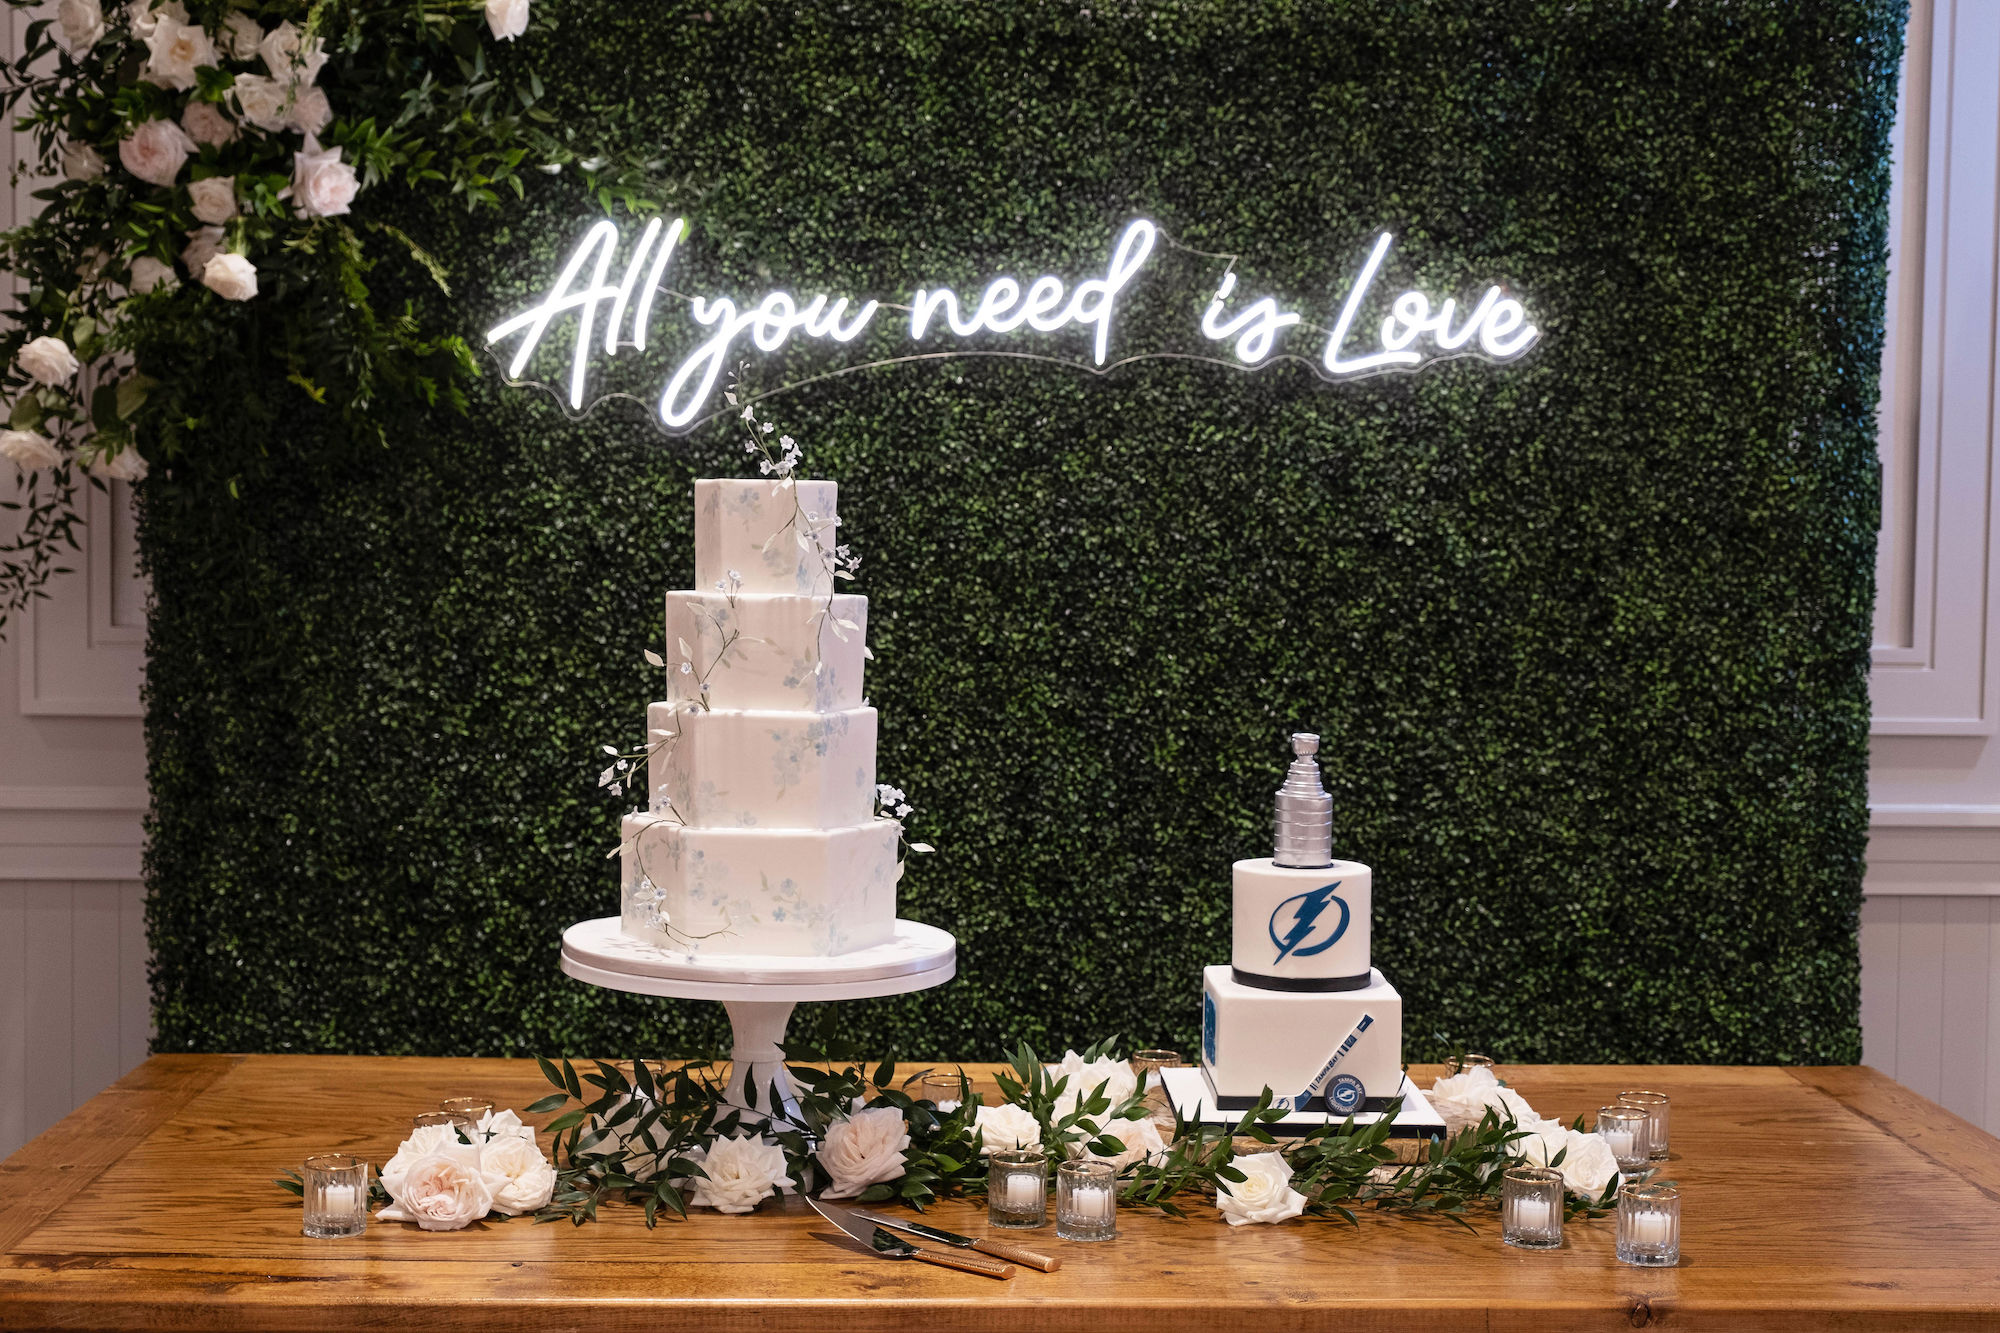 Four-Tier Geometric Wedding Cake | Lightning Groom Cake | All You Need is Love Neon Wedding Cake Dessert Table Sign Ideas